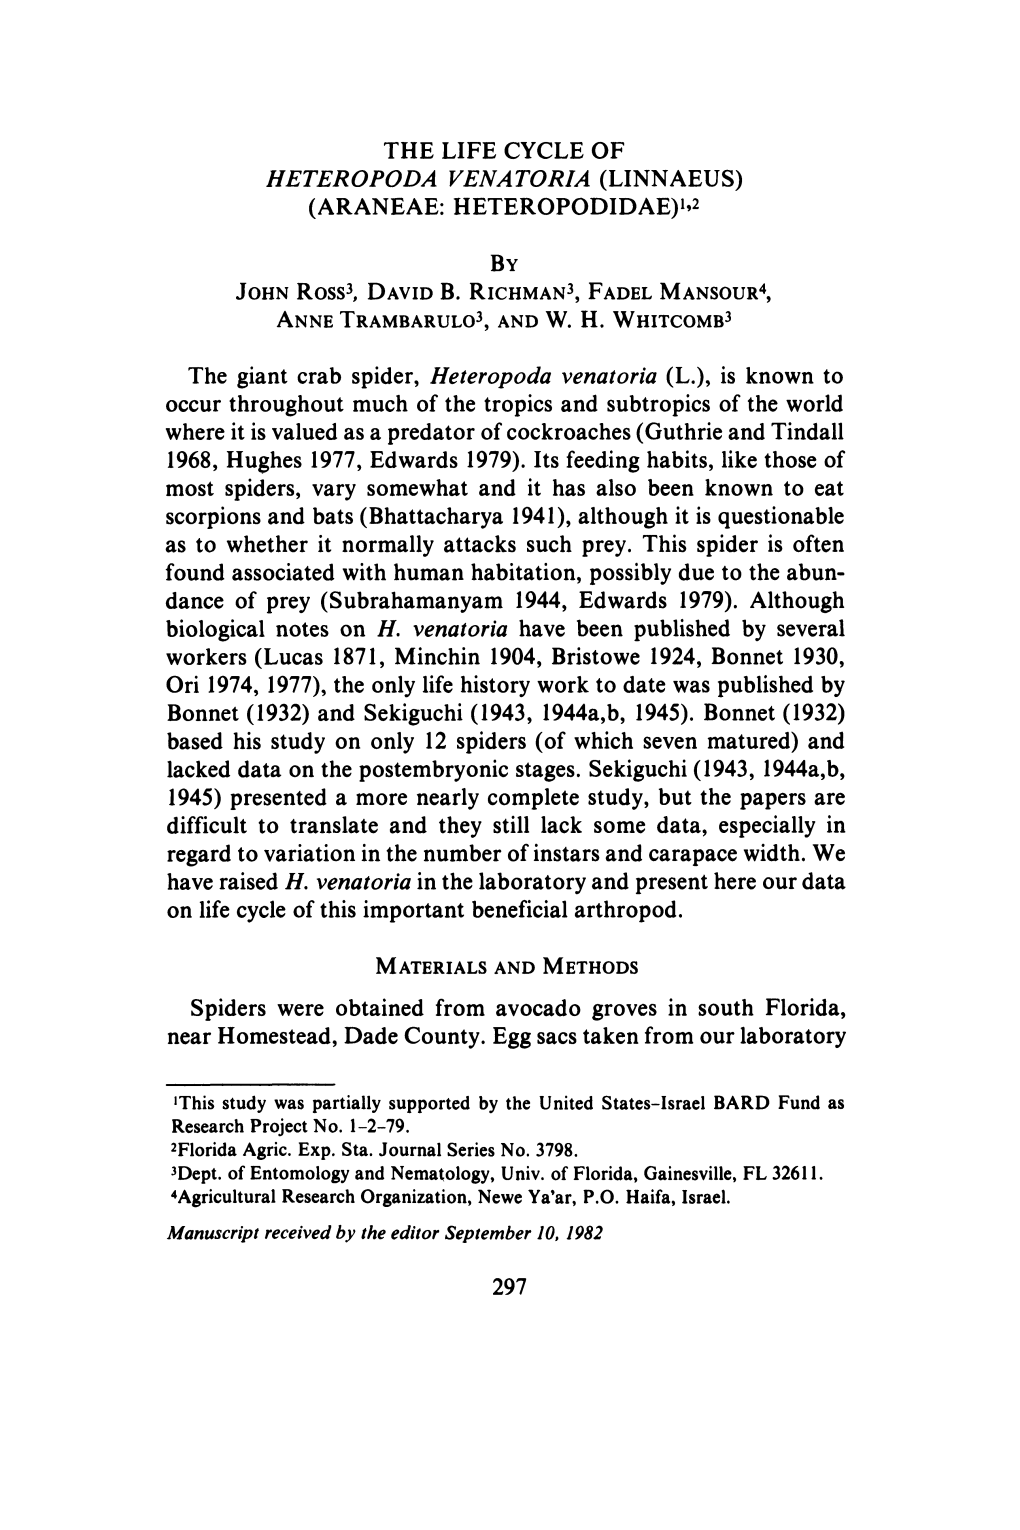 The Life Cycle of Heteropoda Venatoria (Linnaeus) (Araneae: Heteropodidae)I, by John Ross 3, David B